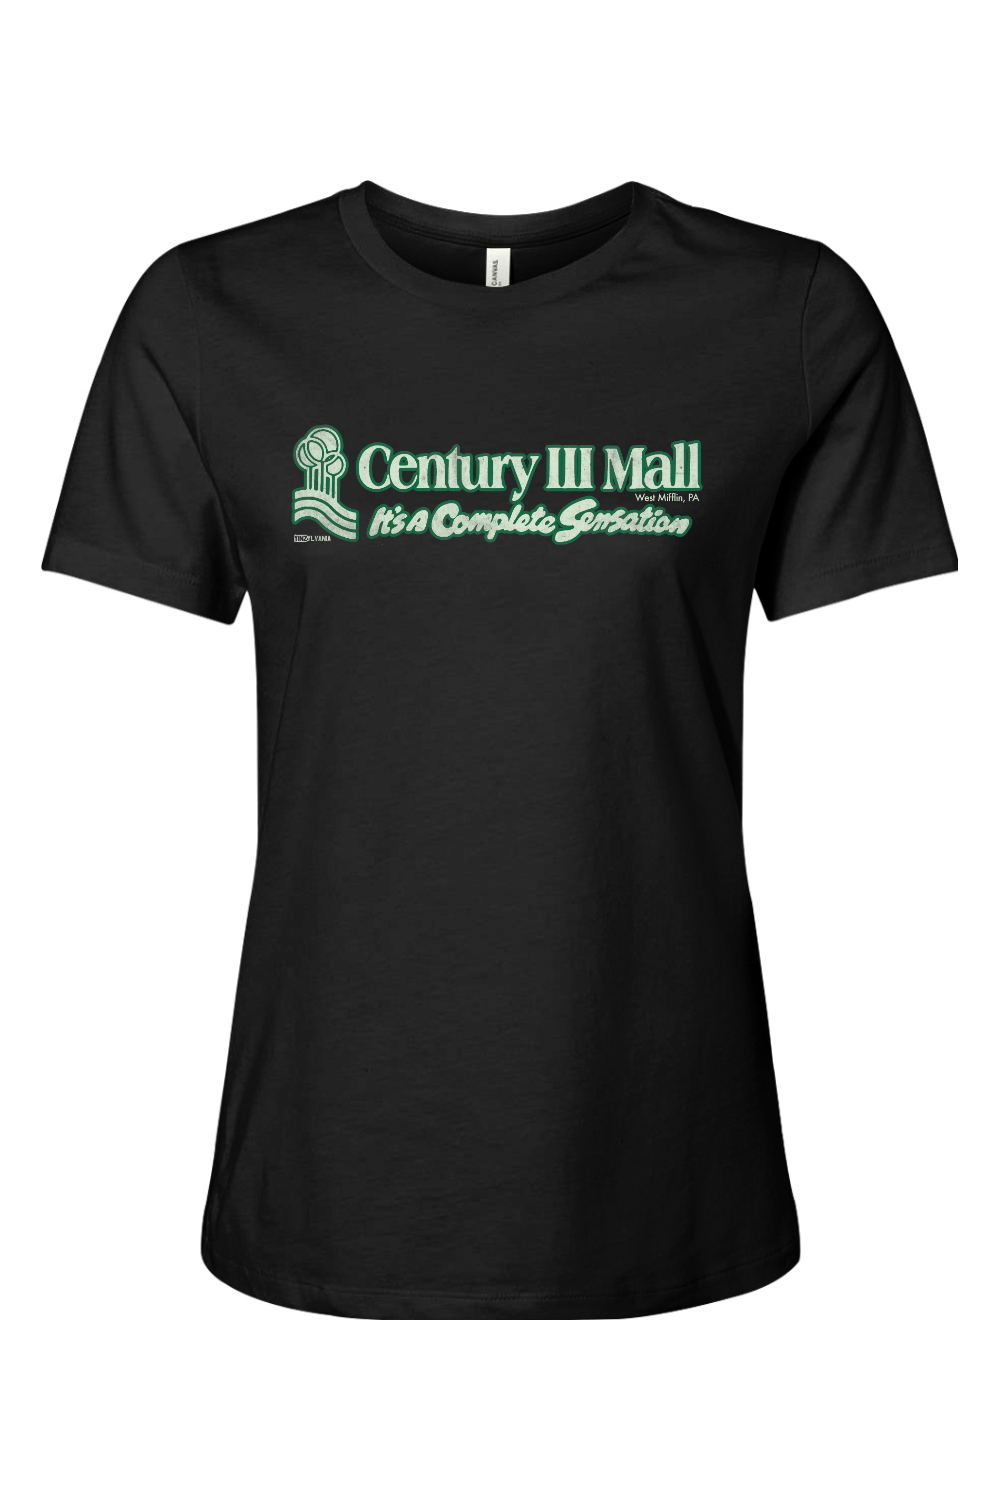 Century III Mall Ladies - Bella + Canvas Women’s Relaxed Jersey Short Sleeve Tee - Yinzylvania